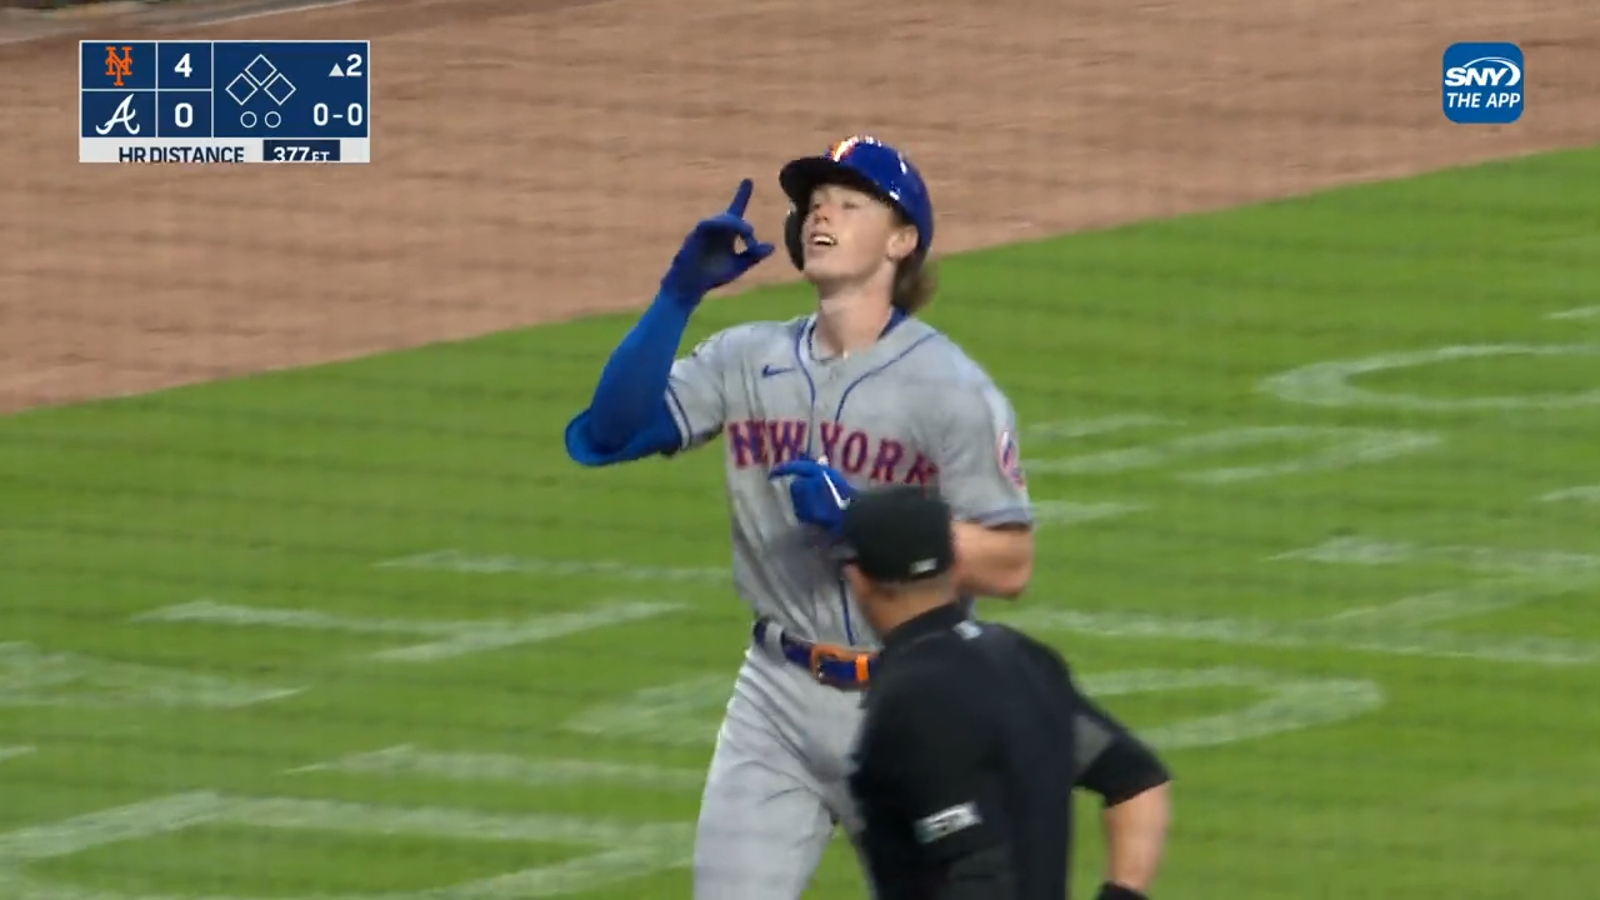 Mets prospect Brett Baty hits a home run in his first major-league at-bat